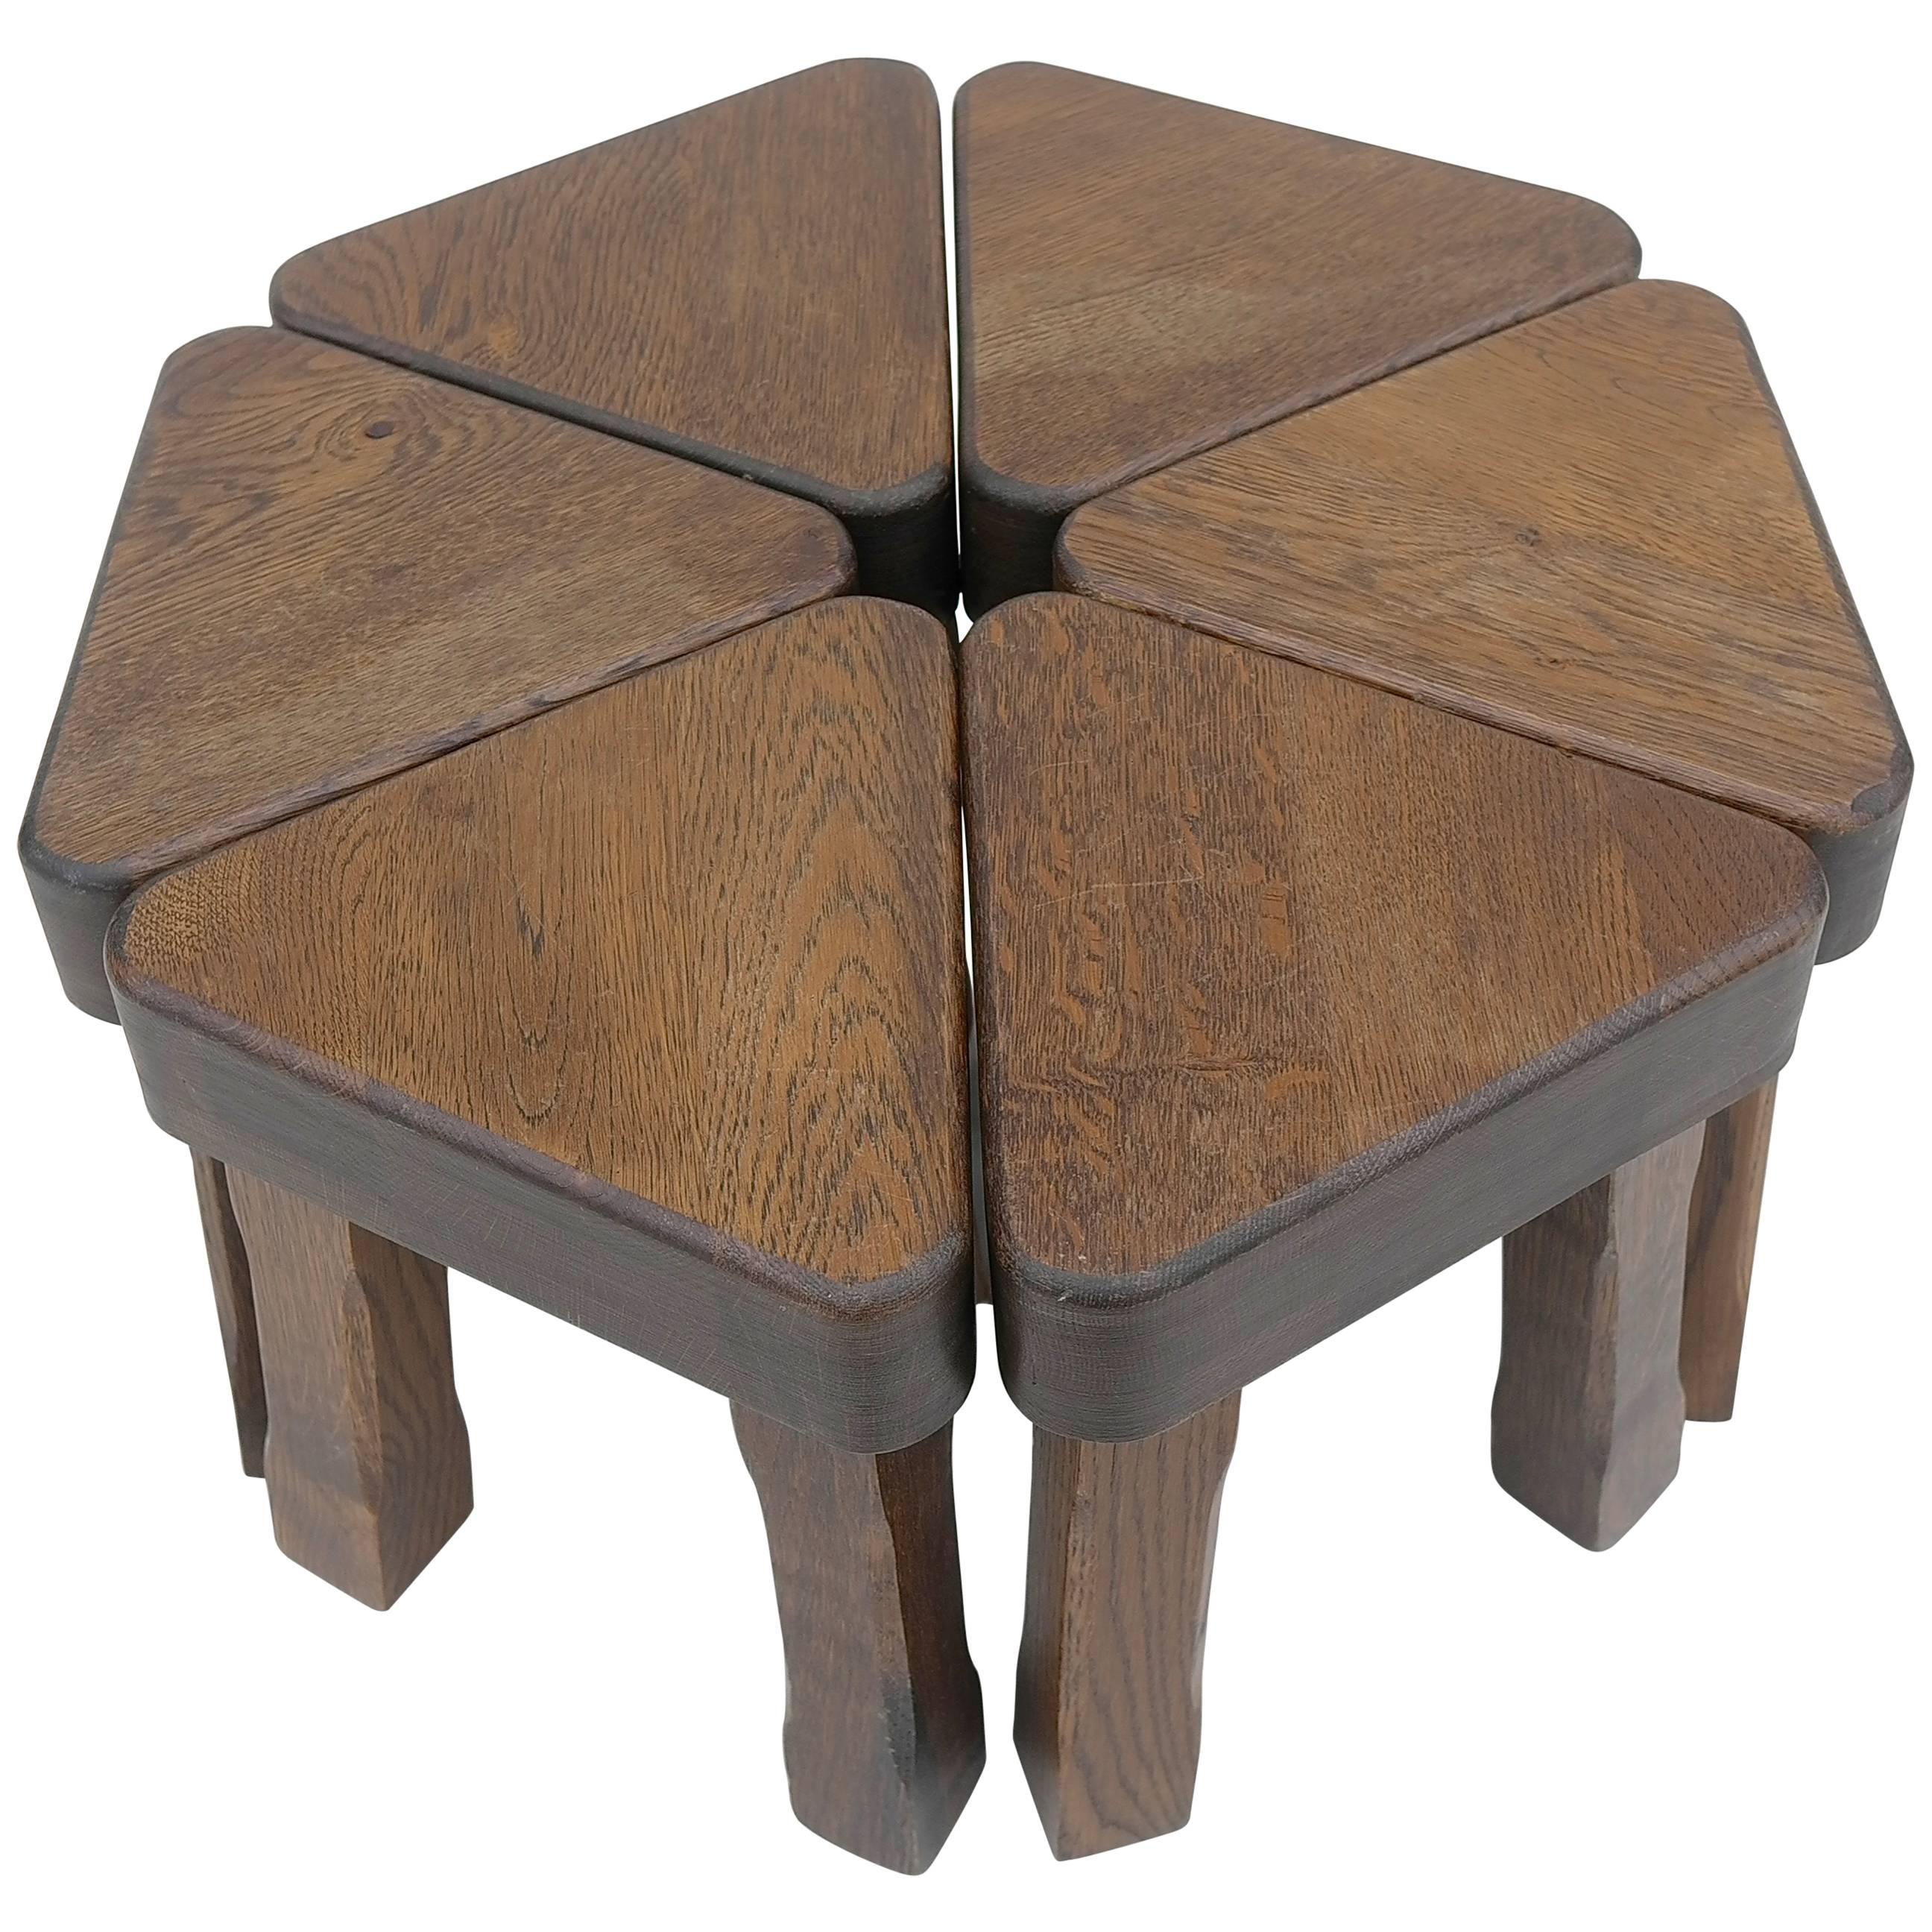 Oak Sculptural Nesting Tables, 1960s For Sale